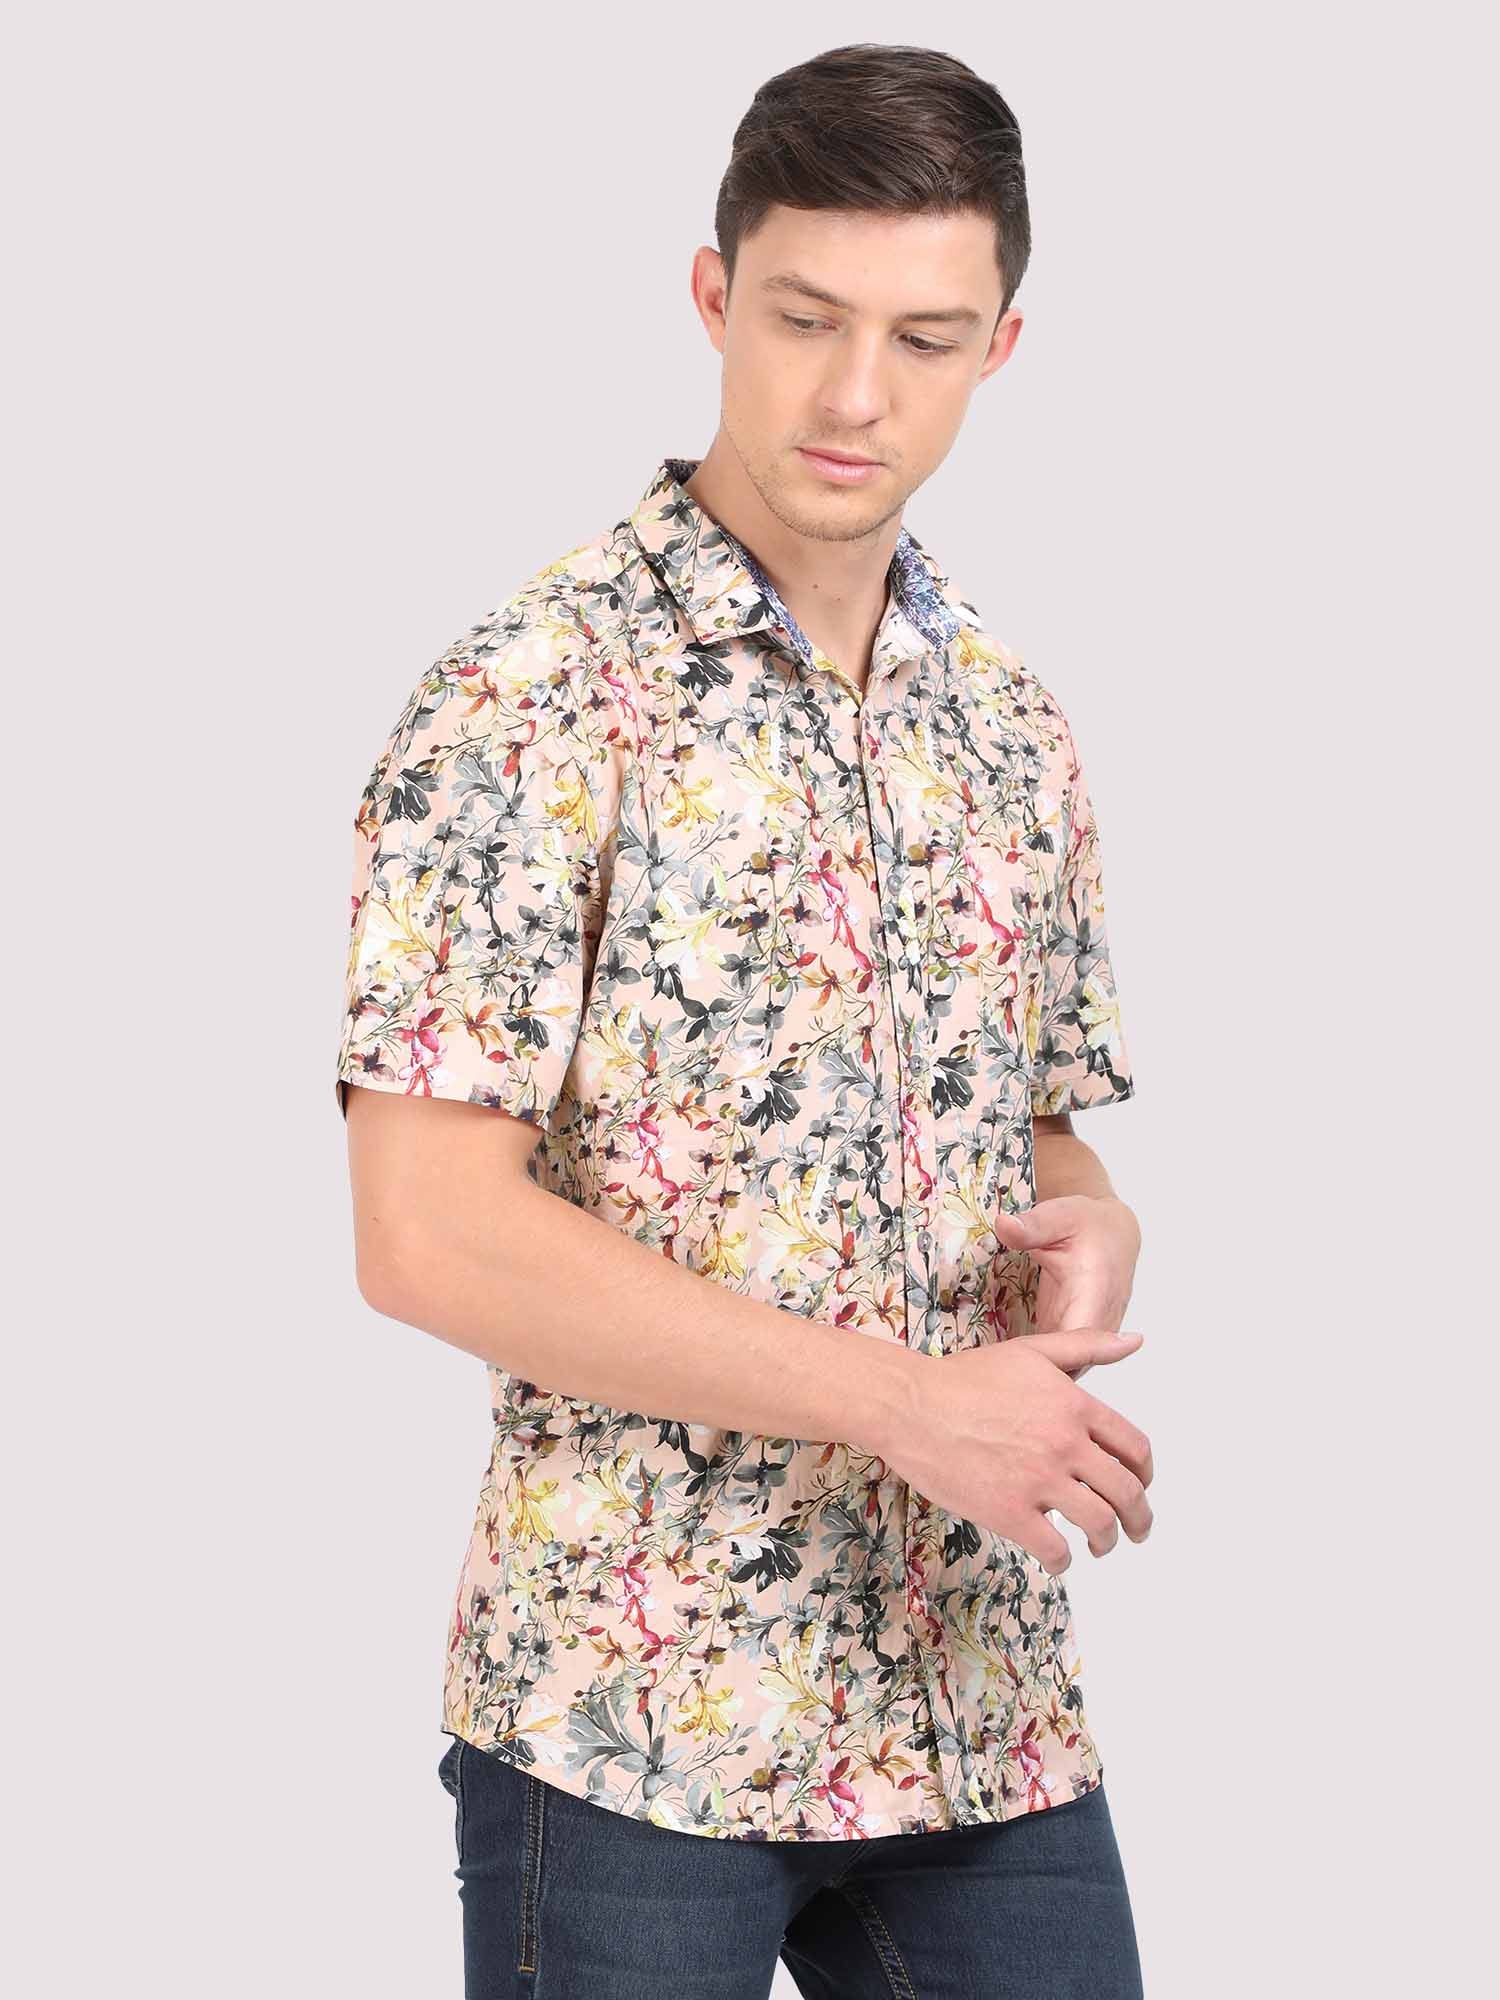 Peachy Floral Digital Printed Half Shirt